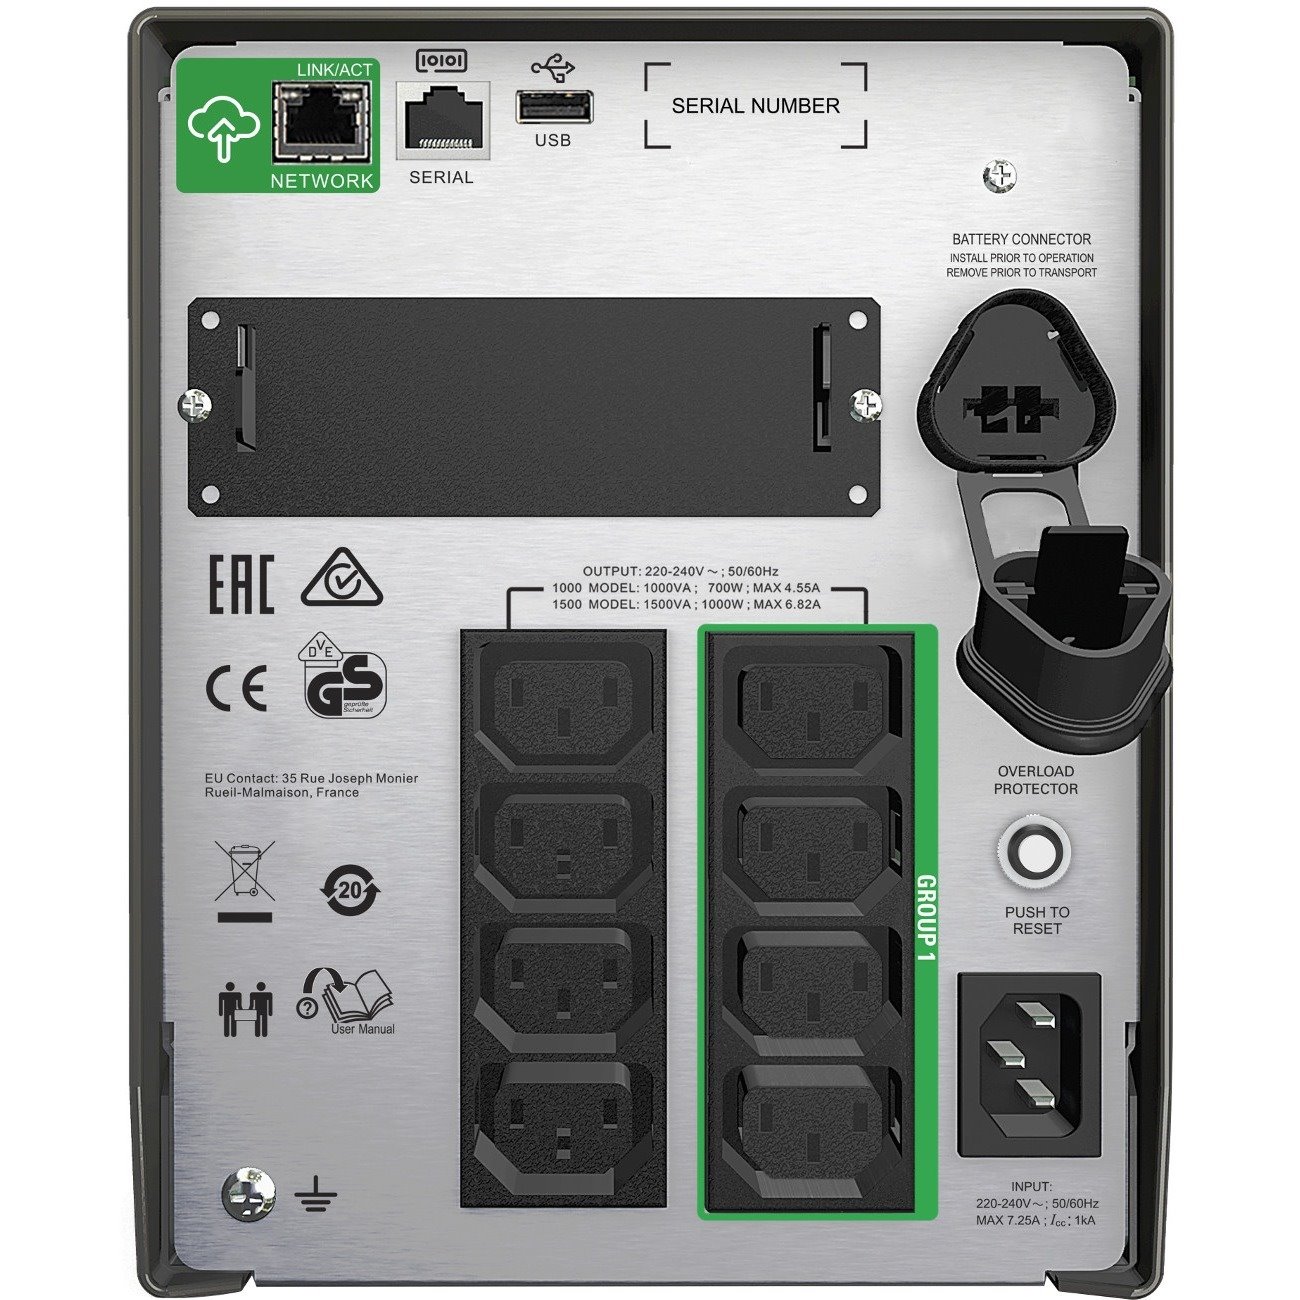 APC by Schneider Electric Smart-UPS Line-interactive UPS - 1.50 kVA/1 kW